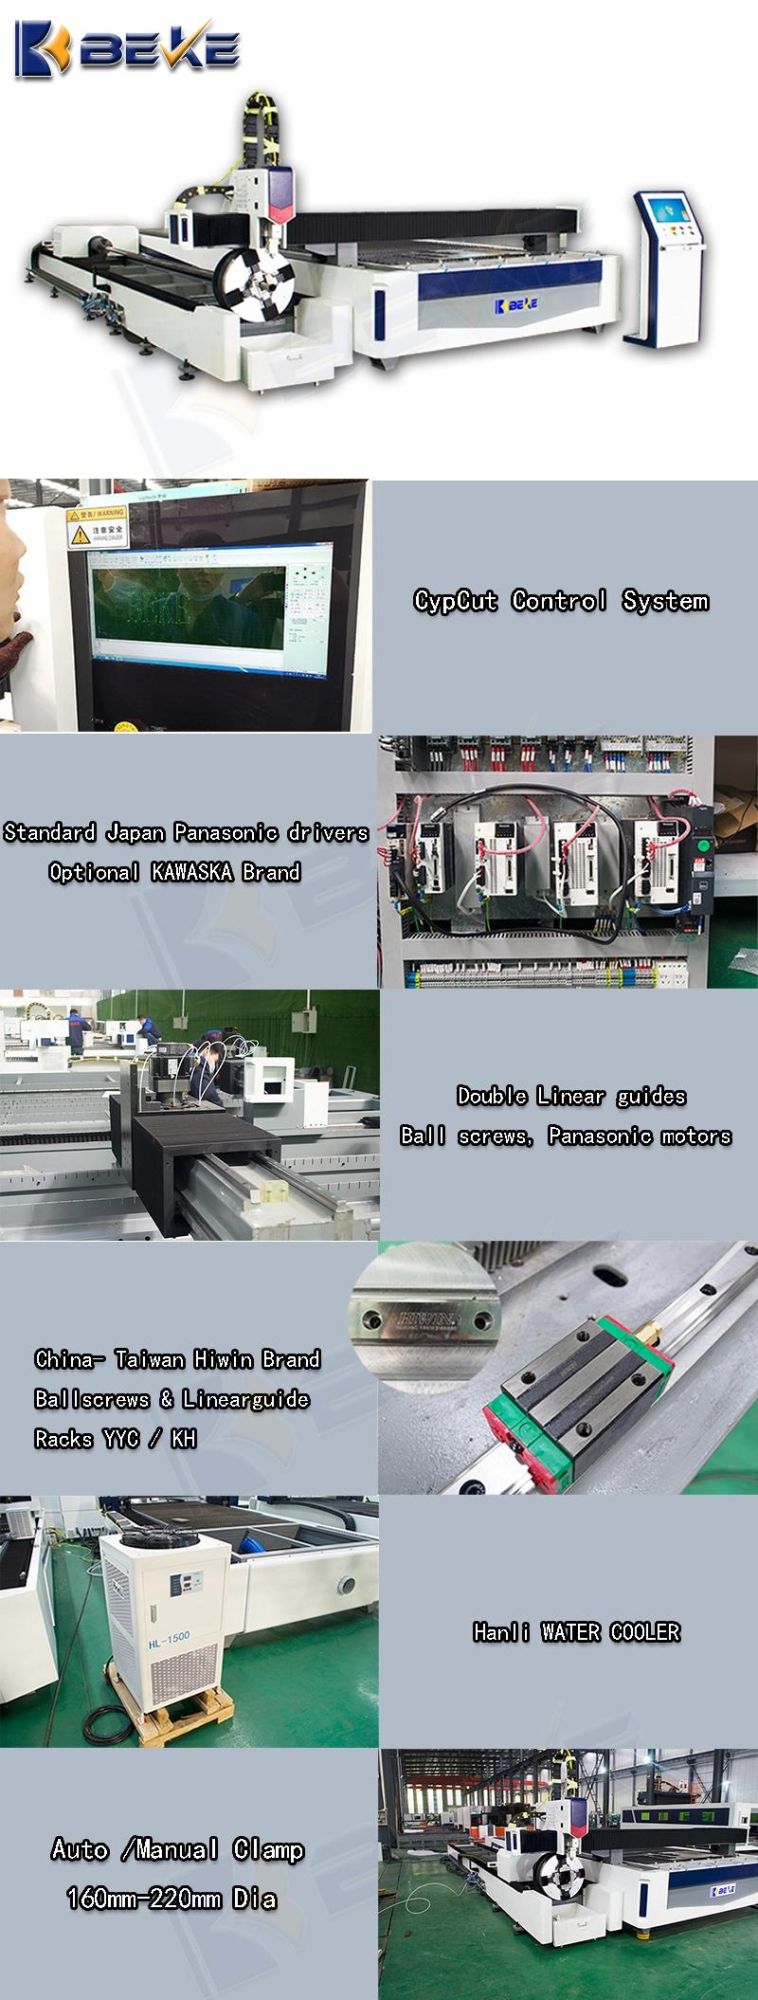 Nanjing Beke Hot Sales 4015 3000W Plate Pipe Aluminium Platefiber Laser Cut Machine